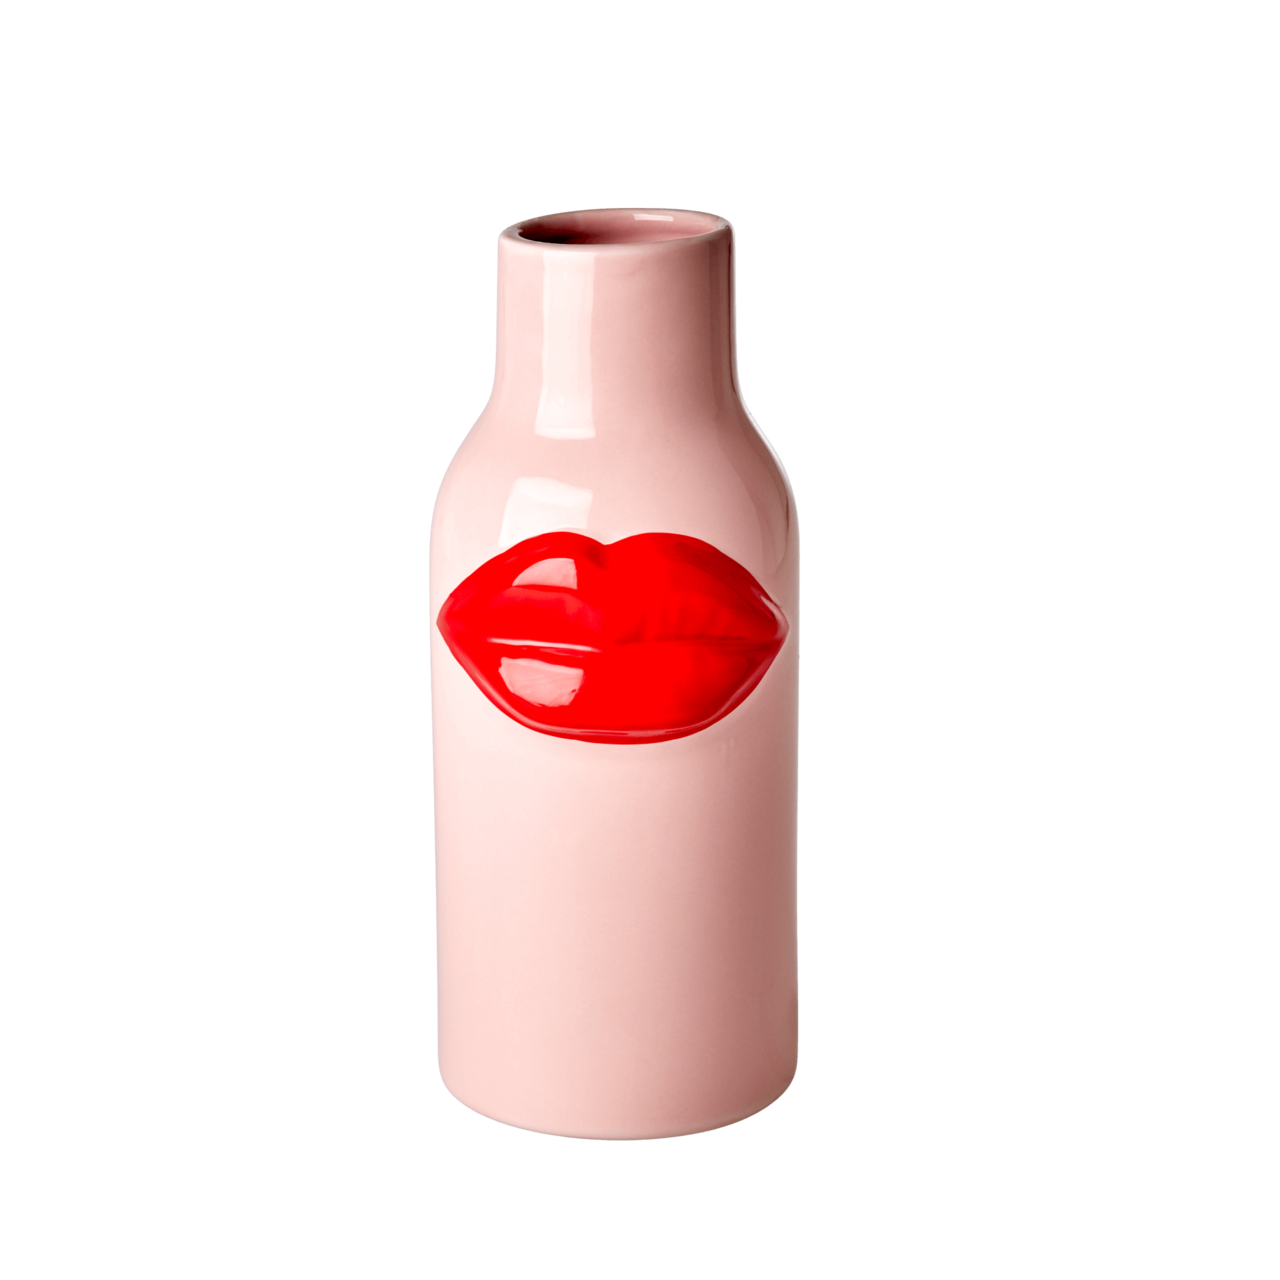 RICE Keramik Vase Red Lipstick Preview Image